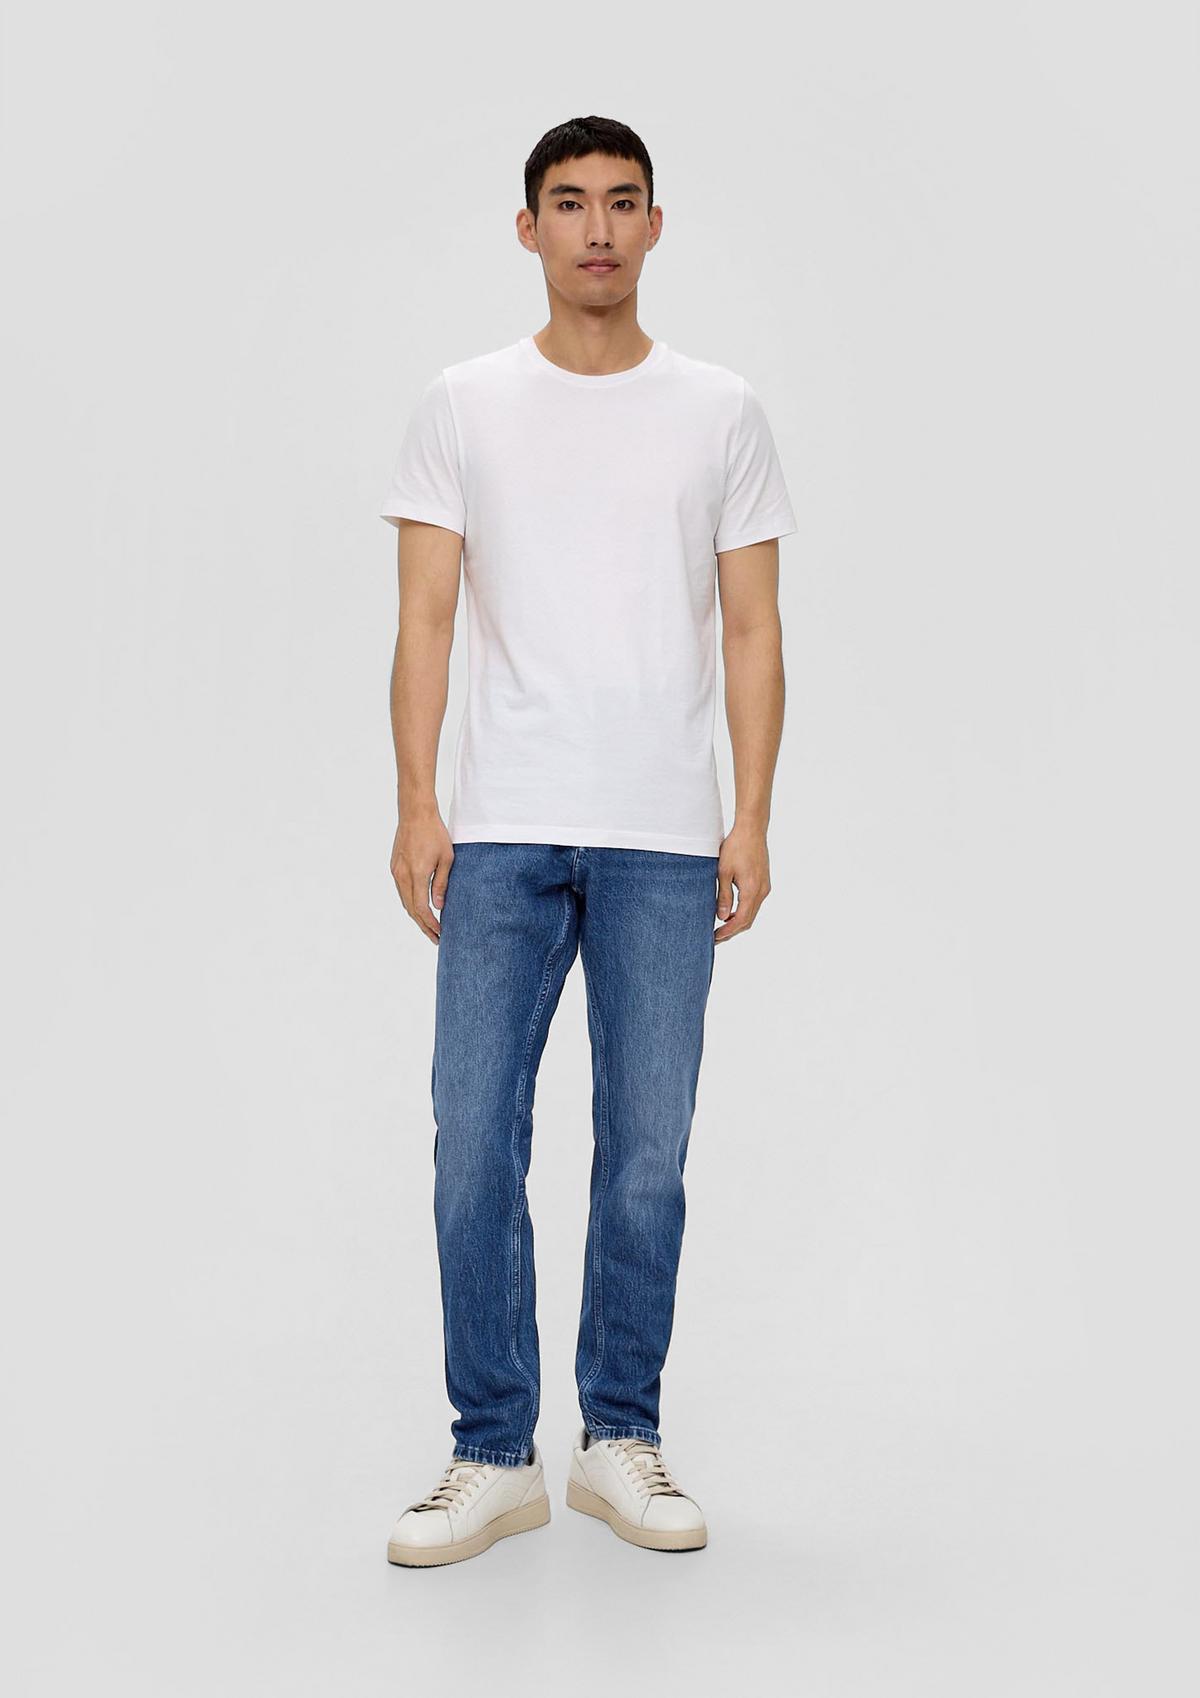 Jeans hlače Mauro/kroj Slim Fit/Mid Rise/Slim Leg